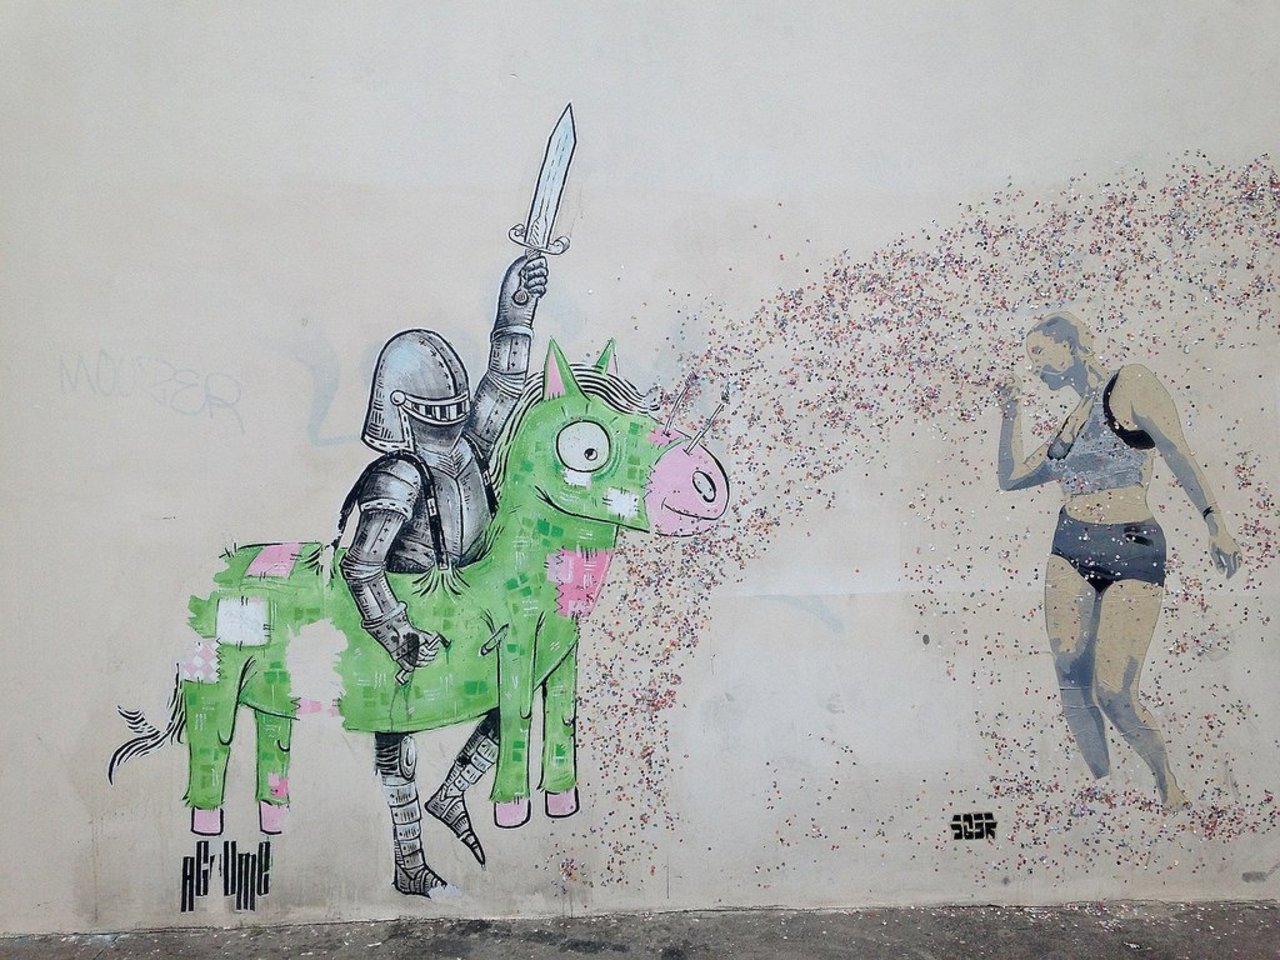 Street Art by Agrume in #Paris http://www.urbacolors.com #art #mural #graffiti #streetart https://t.co/QVF0D7VZrS